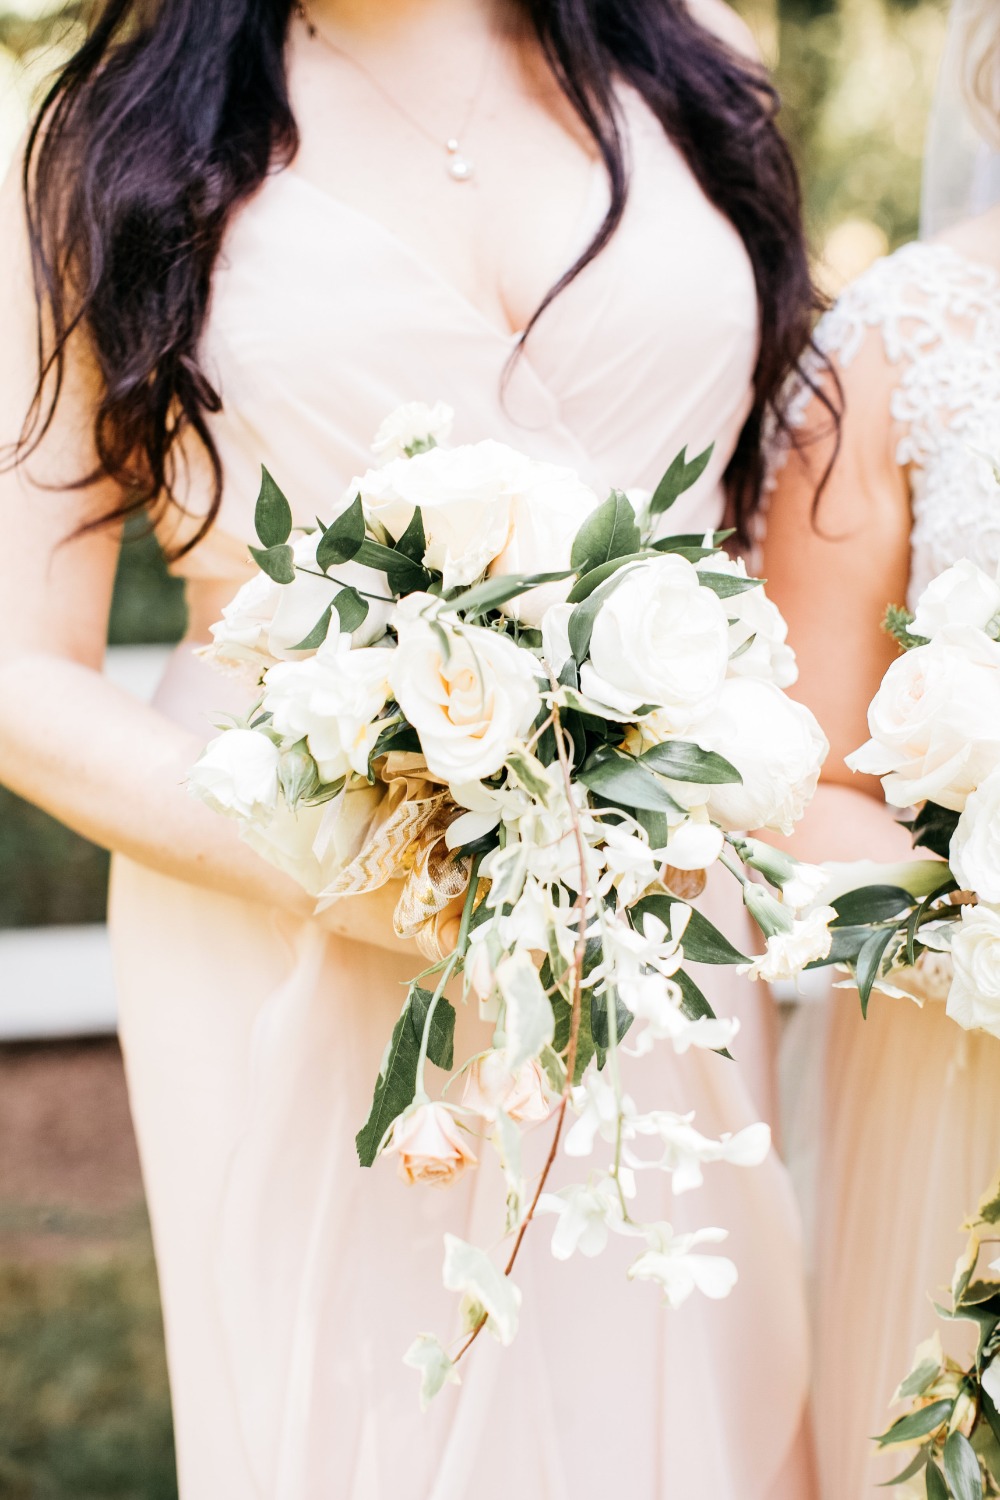 Blush dress and white bridesmaid bouquet